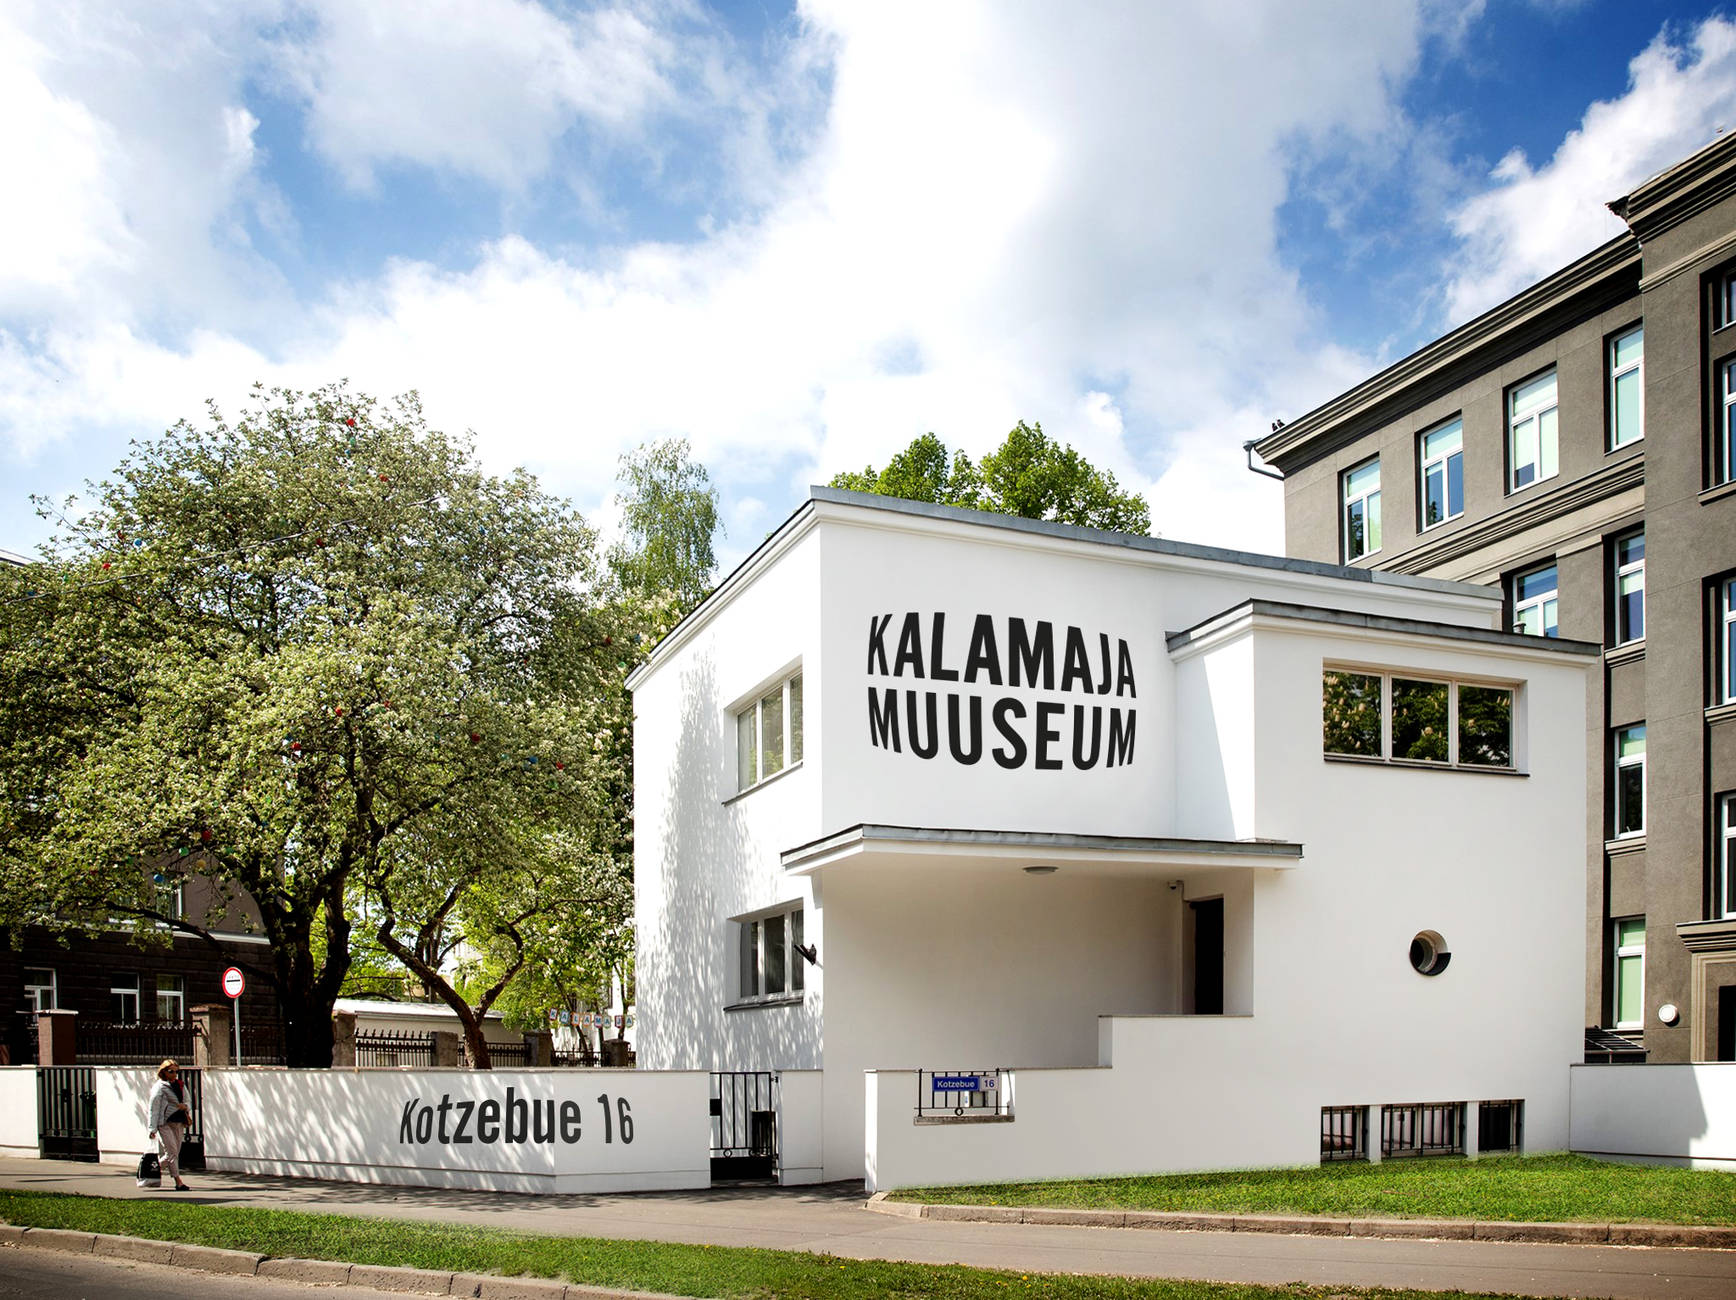  Photo by: Kalamaja Museum / Tallinn City Museum